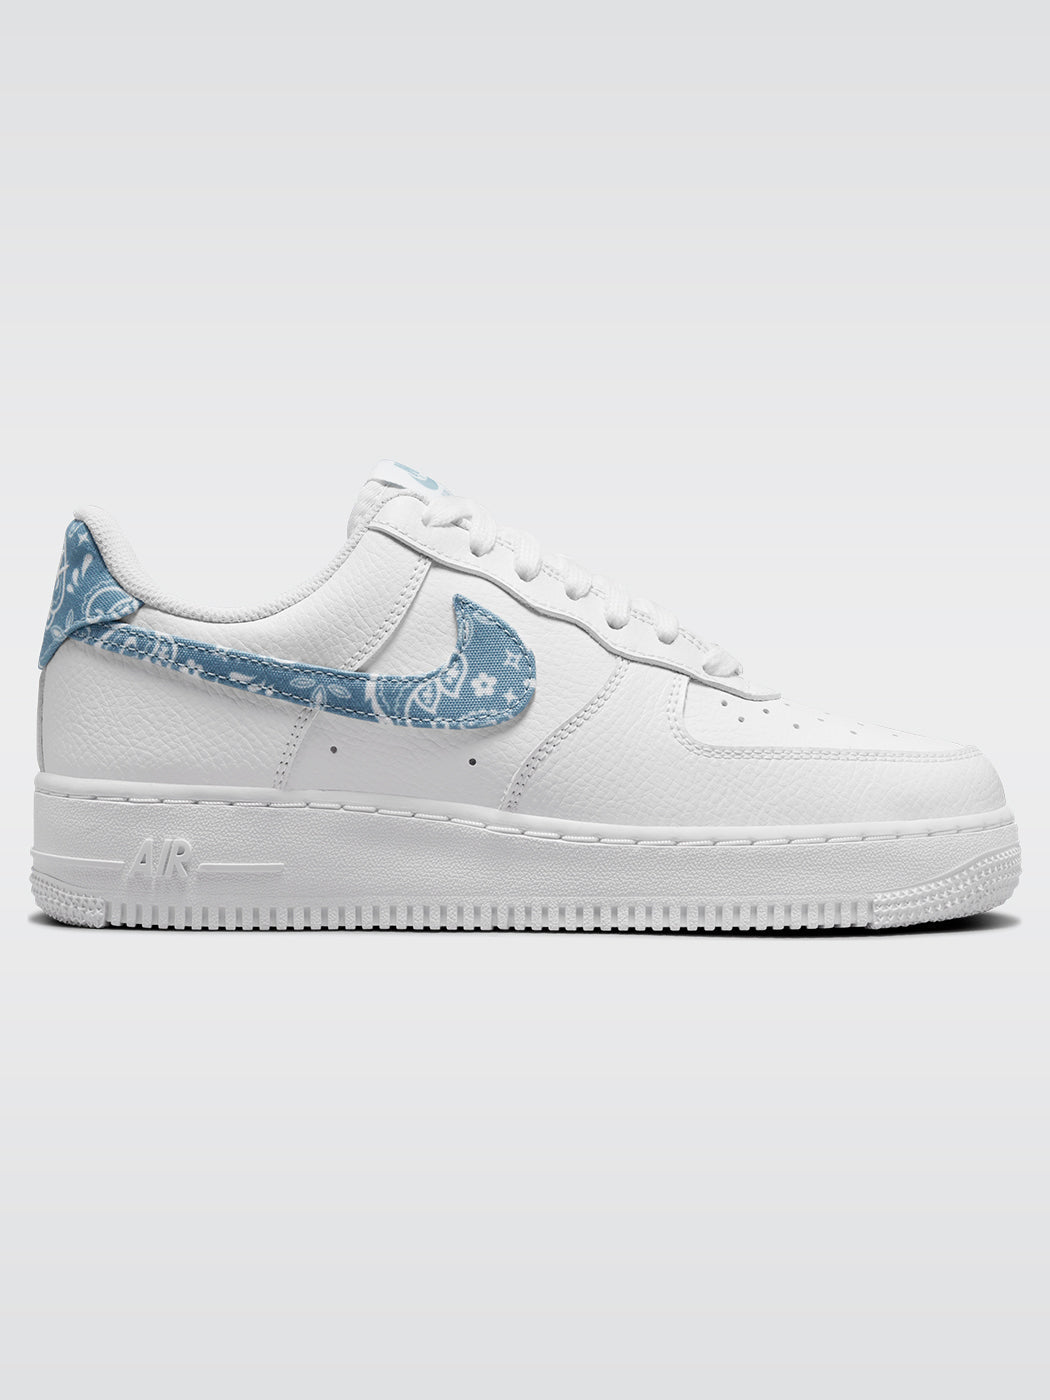 Nike Air Force 1 '07 Essential Sneaker - White-Worn Blue-White